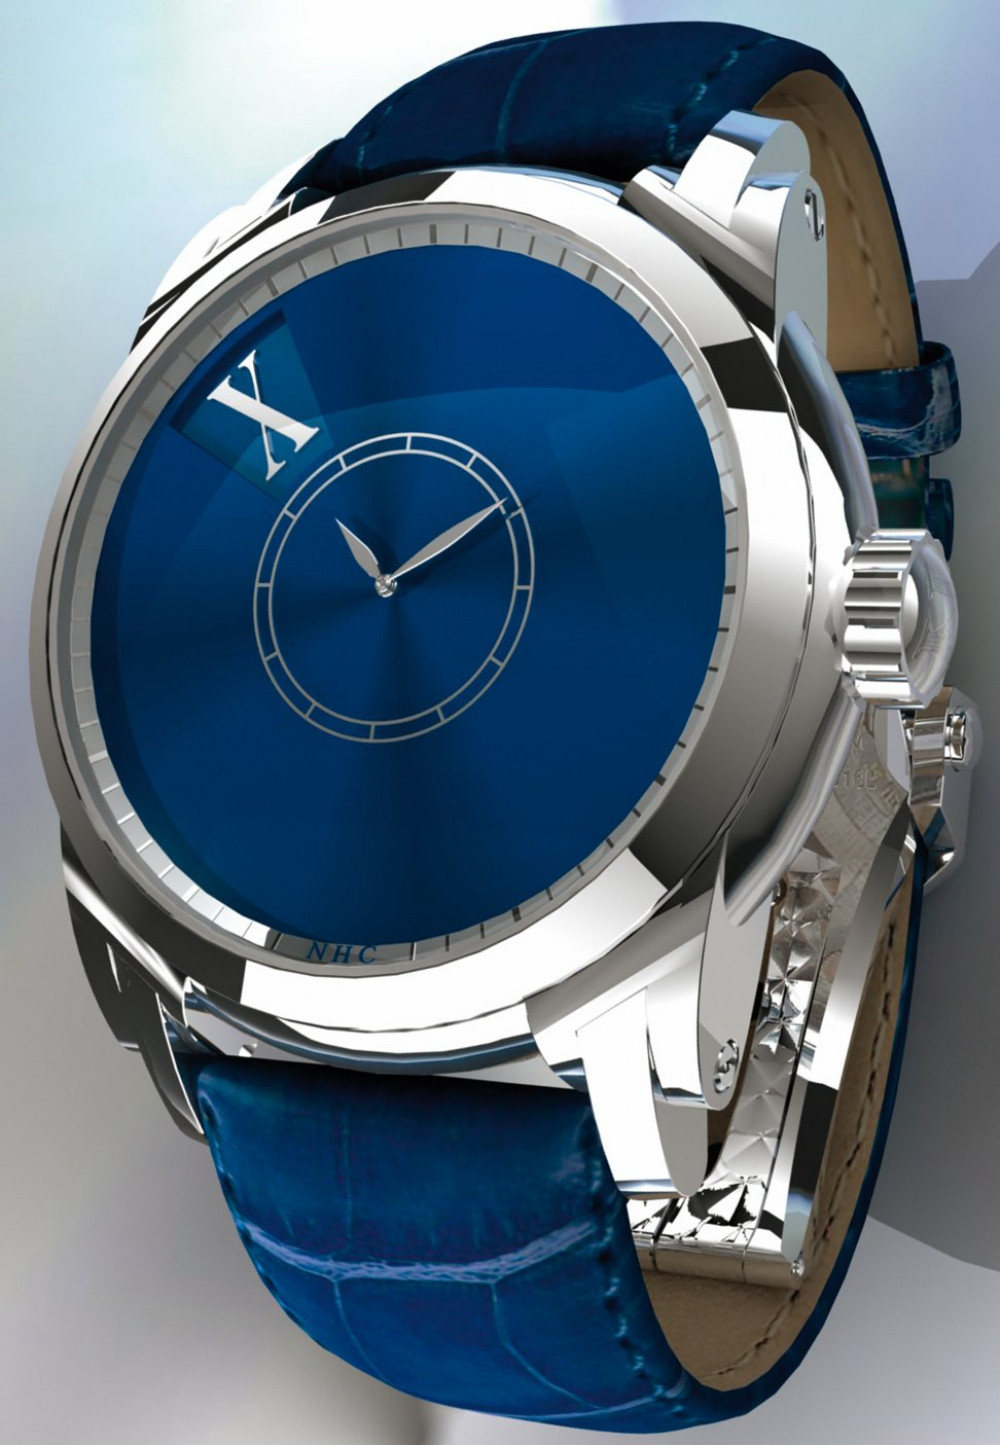 Zegarek firmy NHC - Nouvelle Horlogerie Calabrese, model Avvent'ora